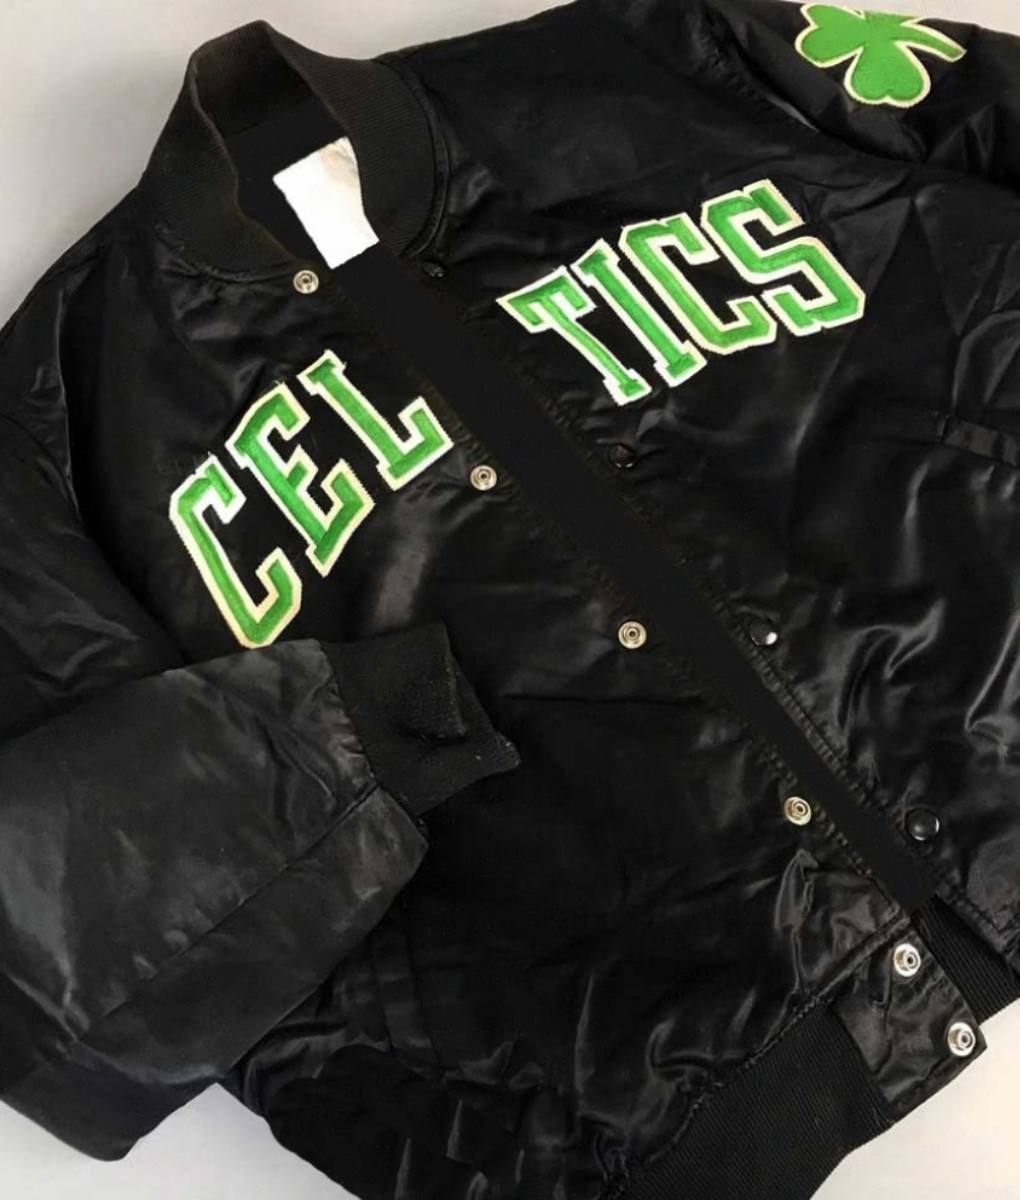 Celtics Starter Boston Black Satin Jacket